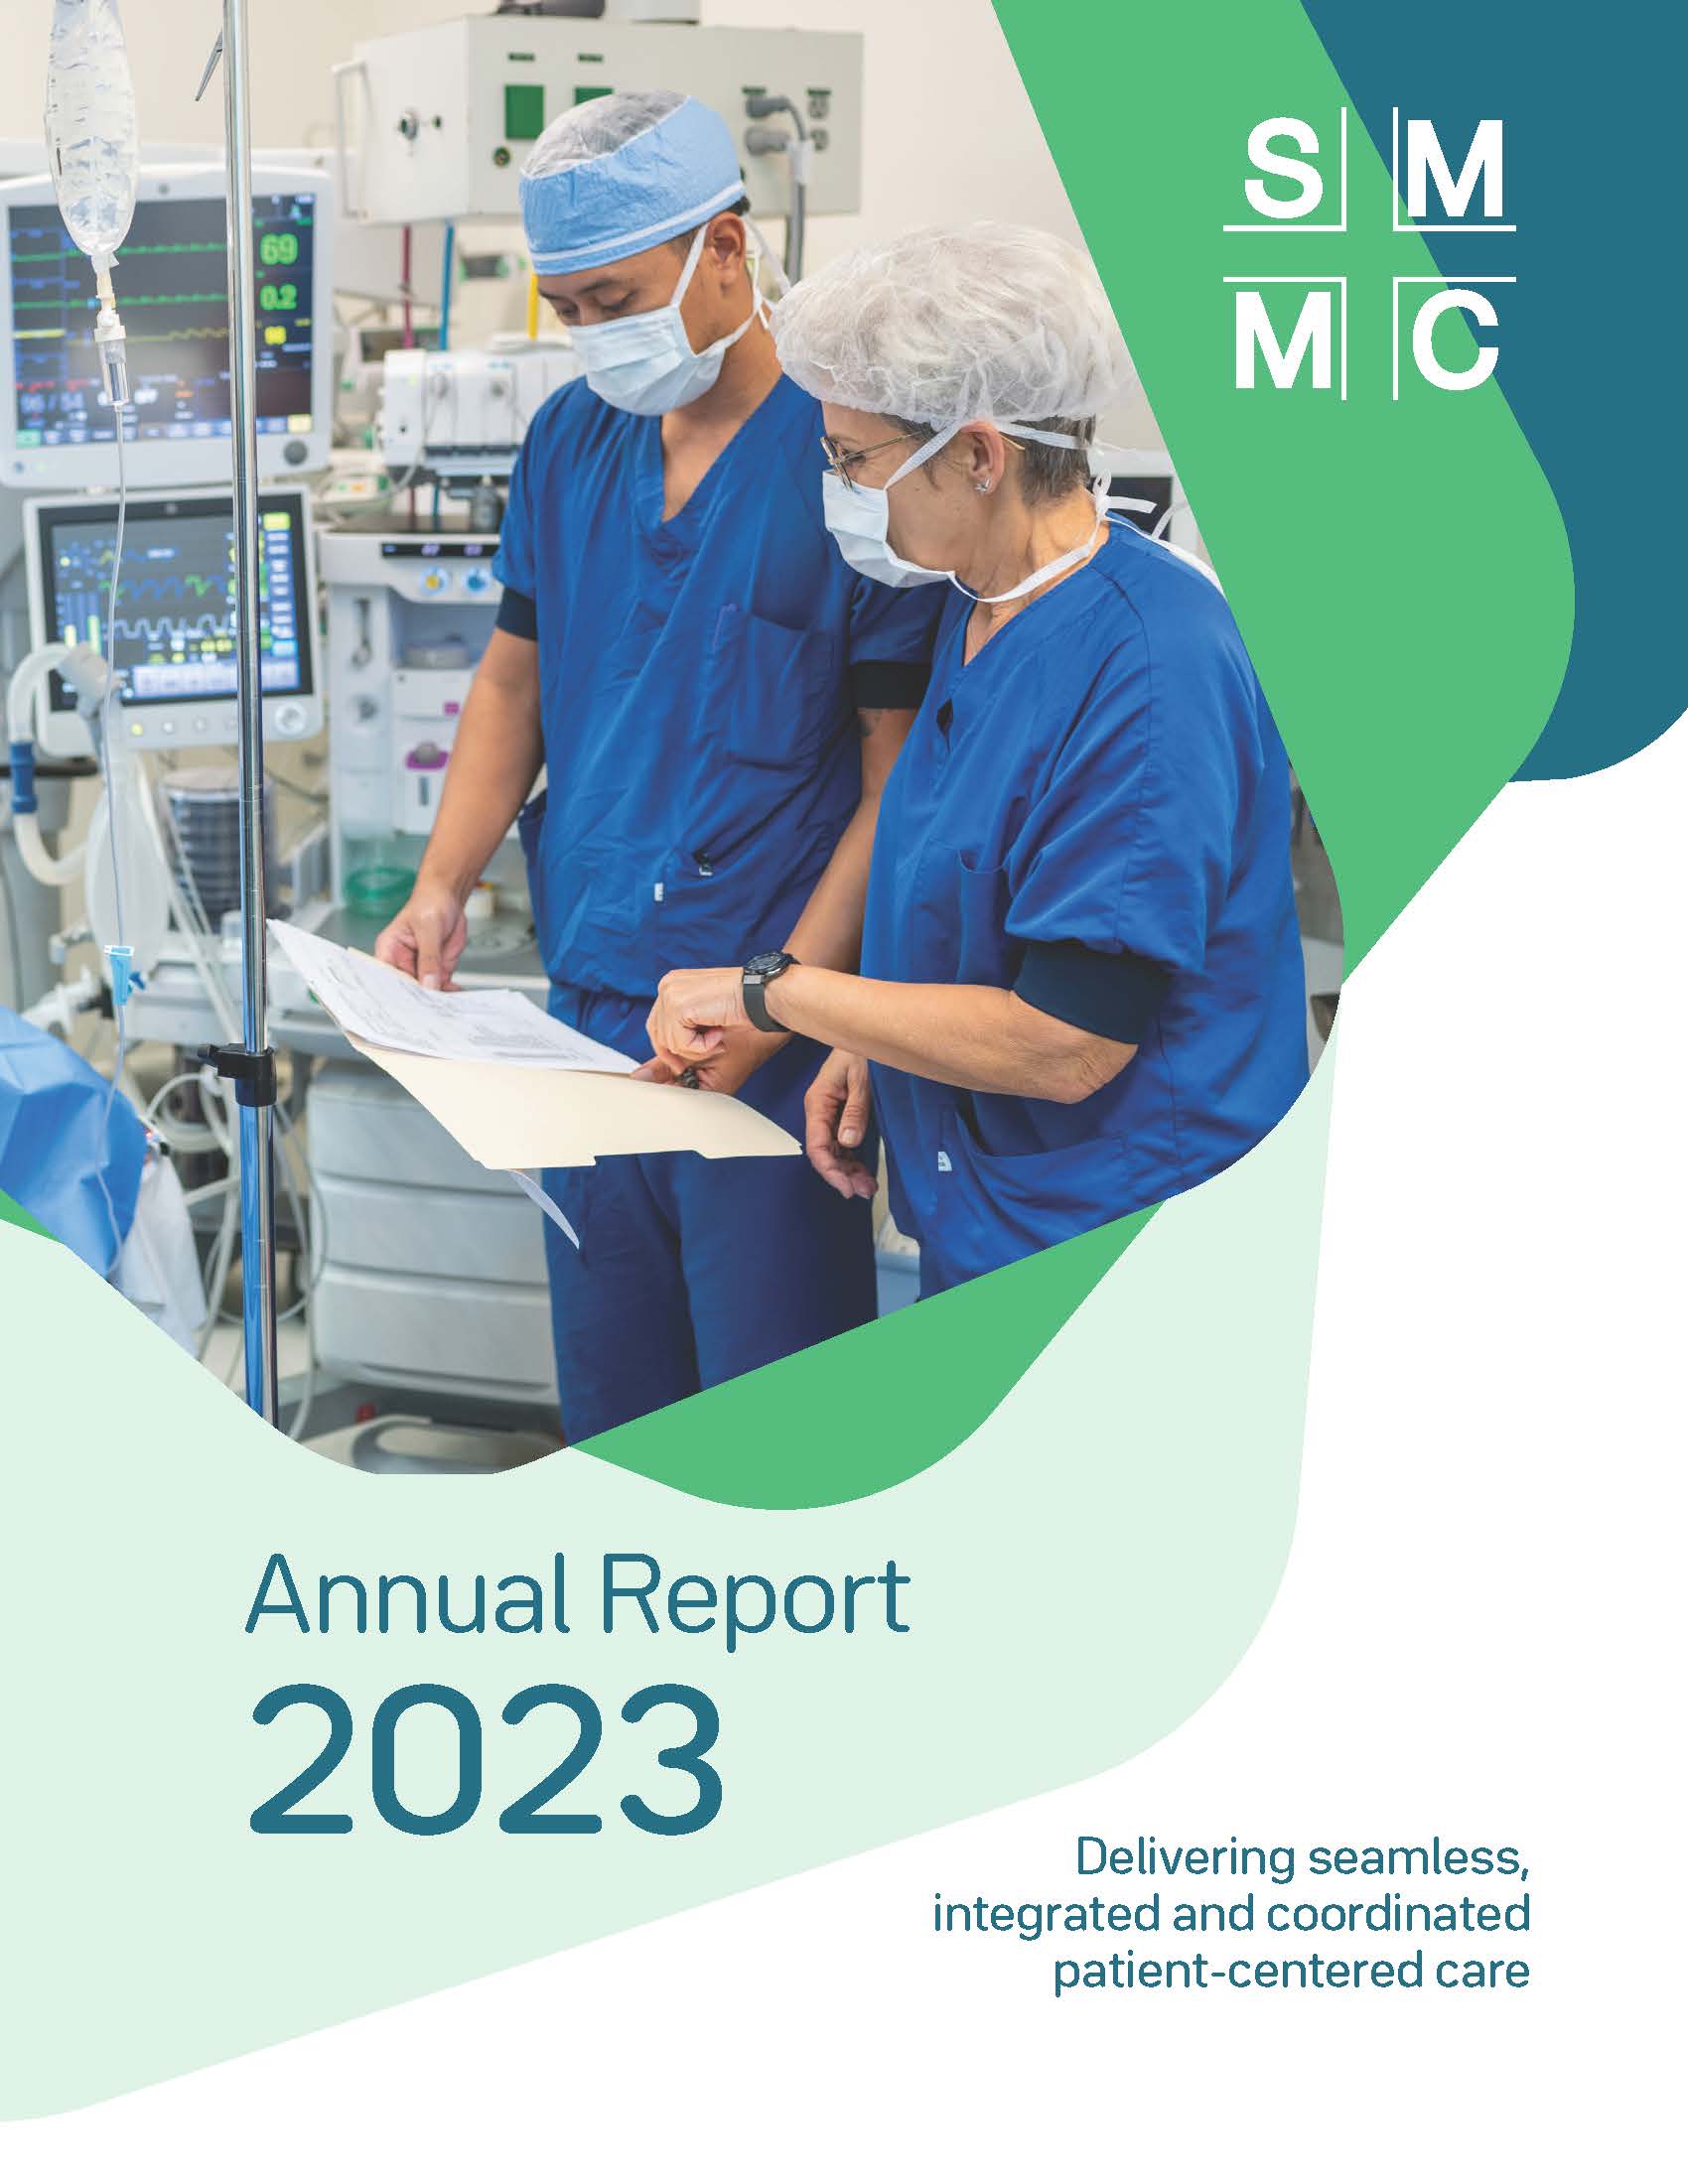 St Maarten Medical Center 2023 Annual Report_Cover